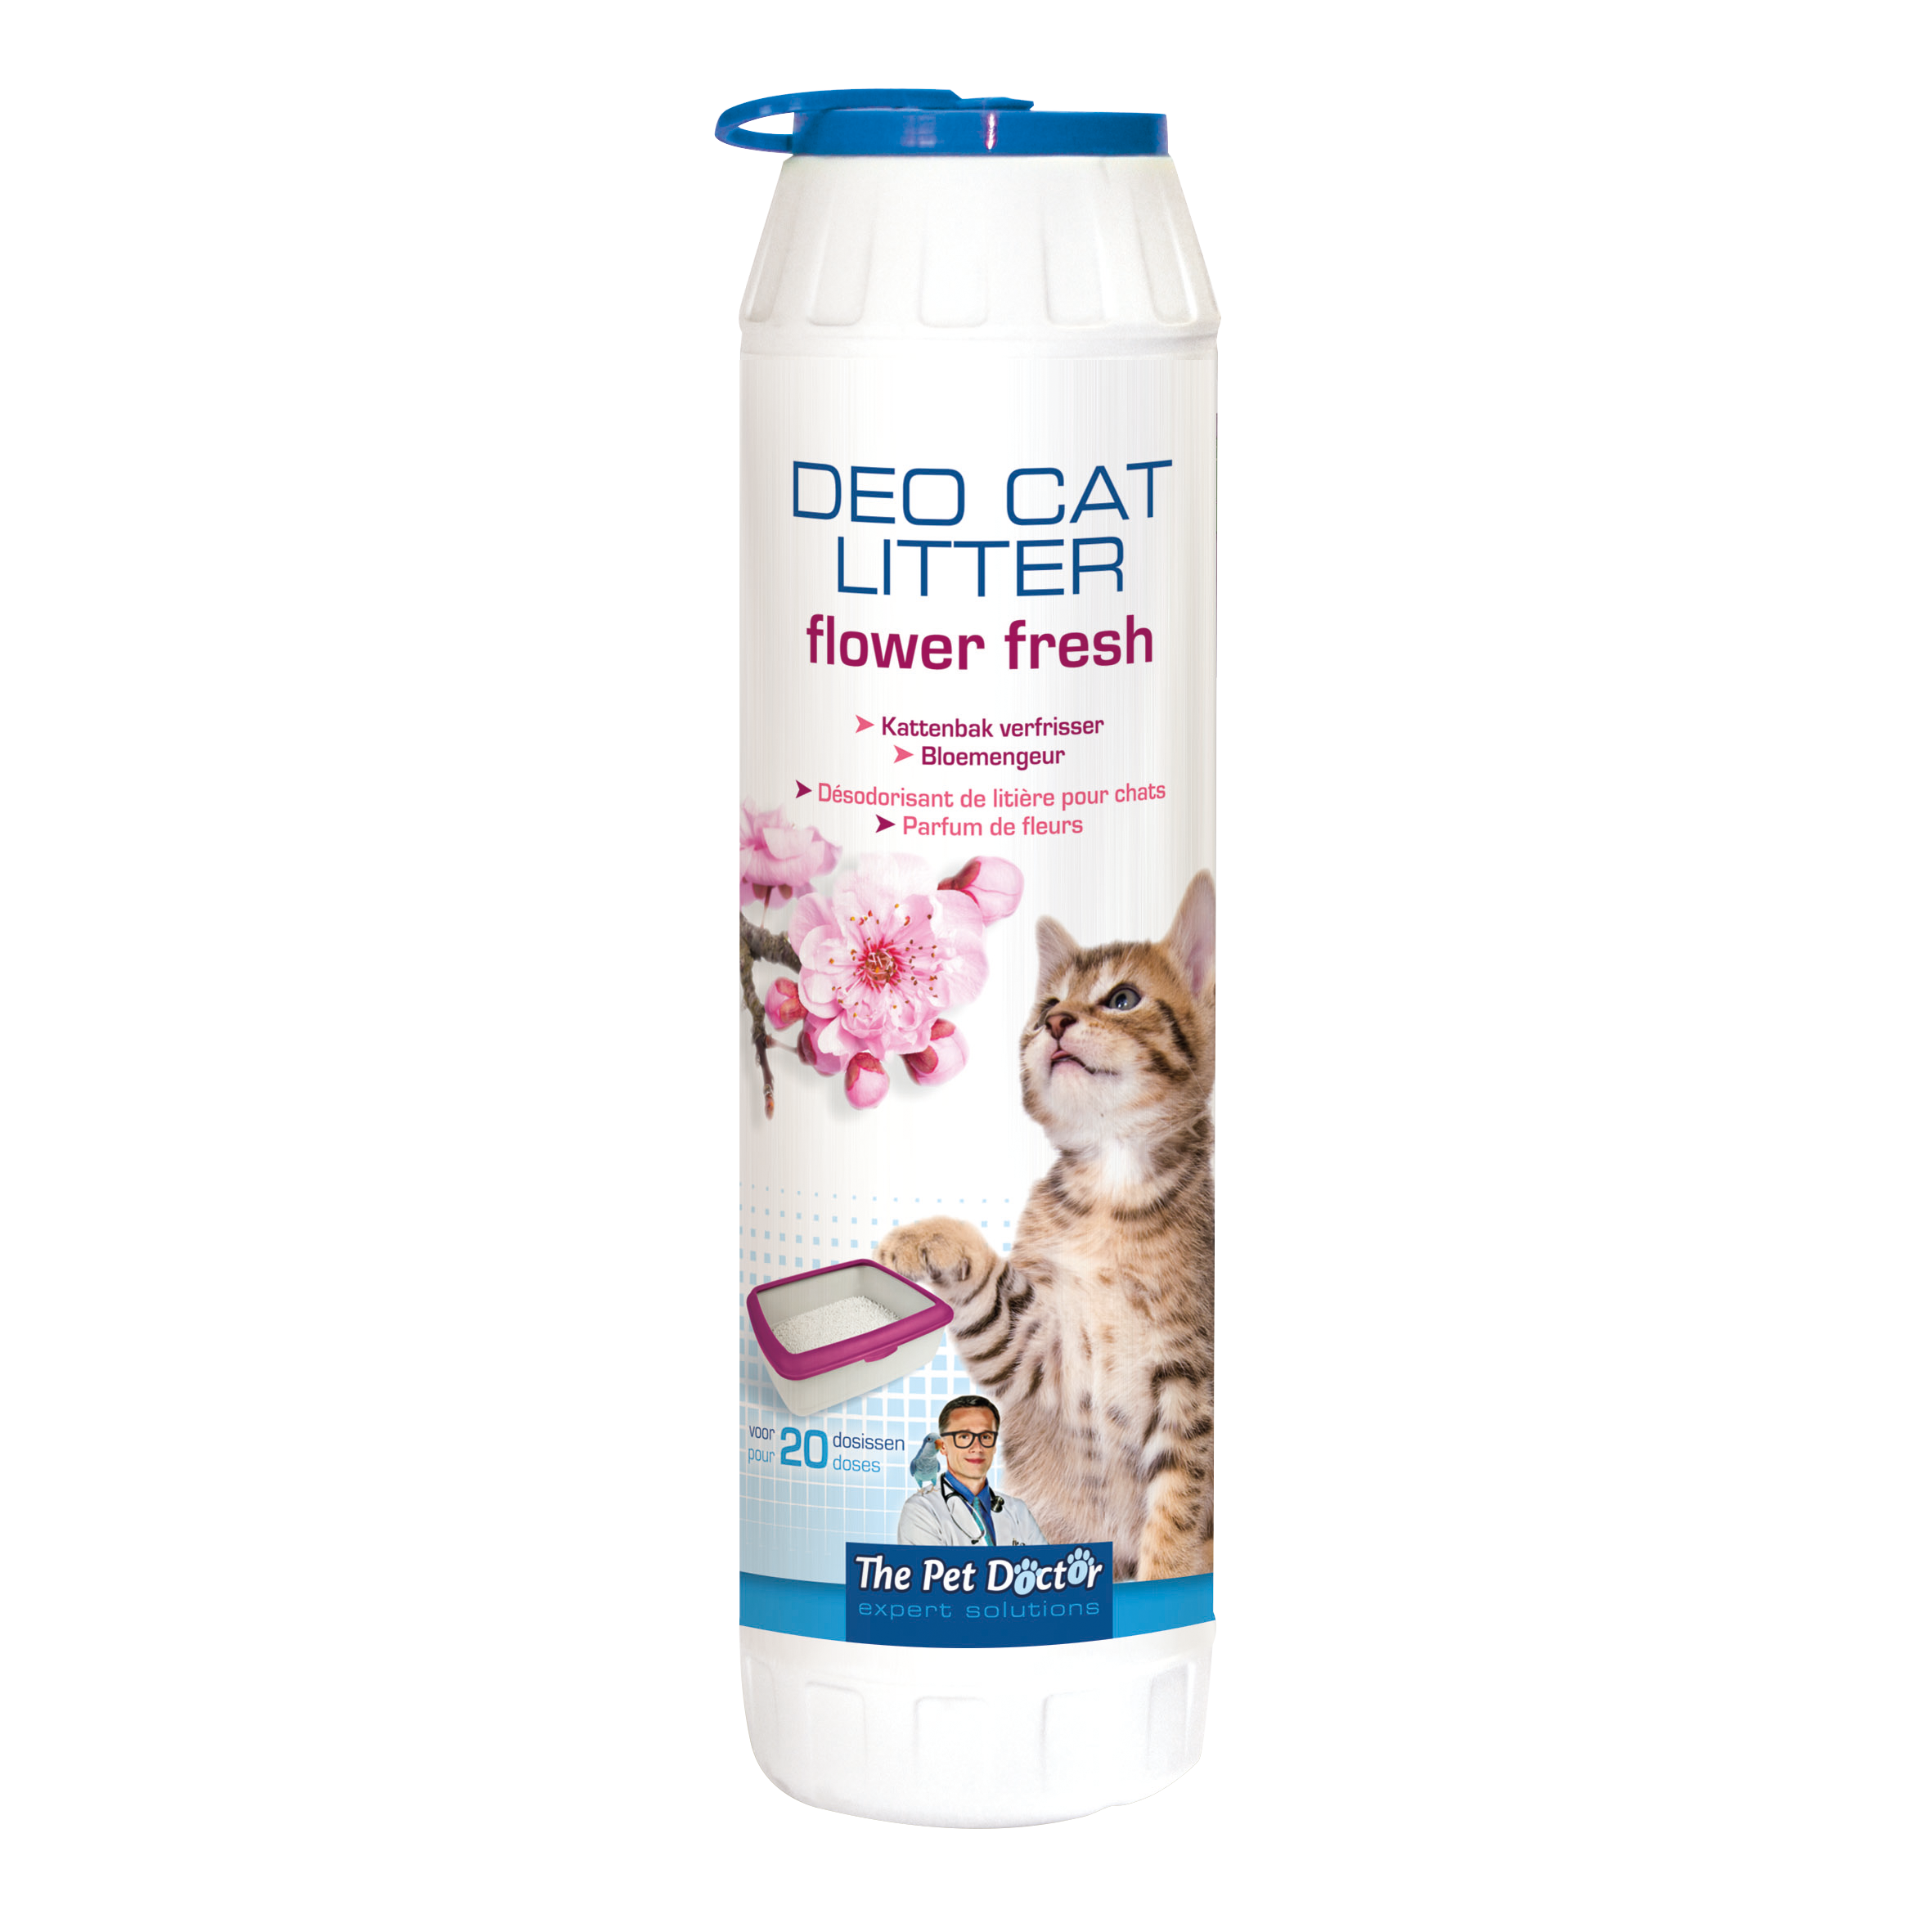 The Pet Doctor Deo Cat Litter Flower Fresh 750 g image